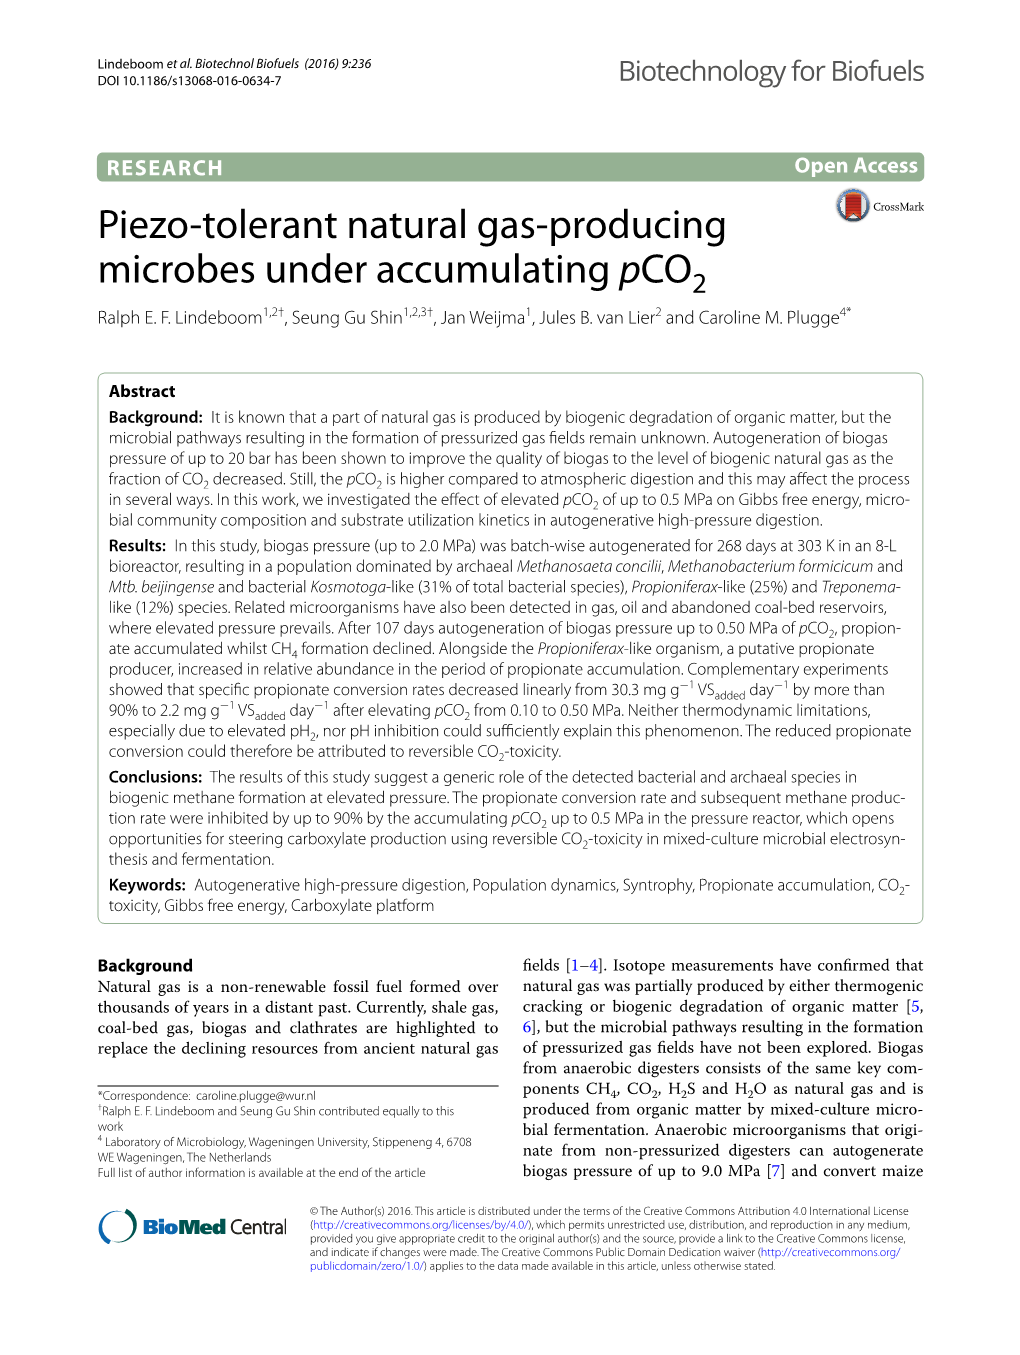 Piezo-Tolerant Natural Gas-Producing Microbes Under Accumulating Pco2